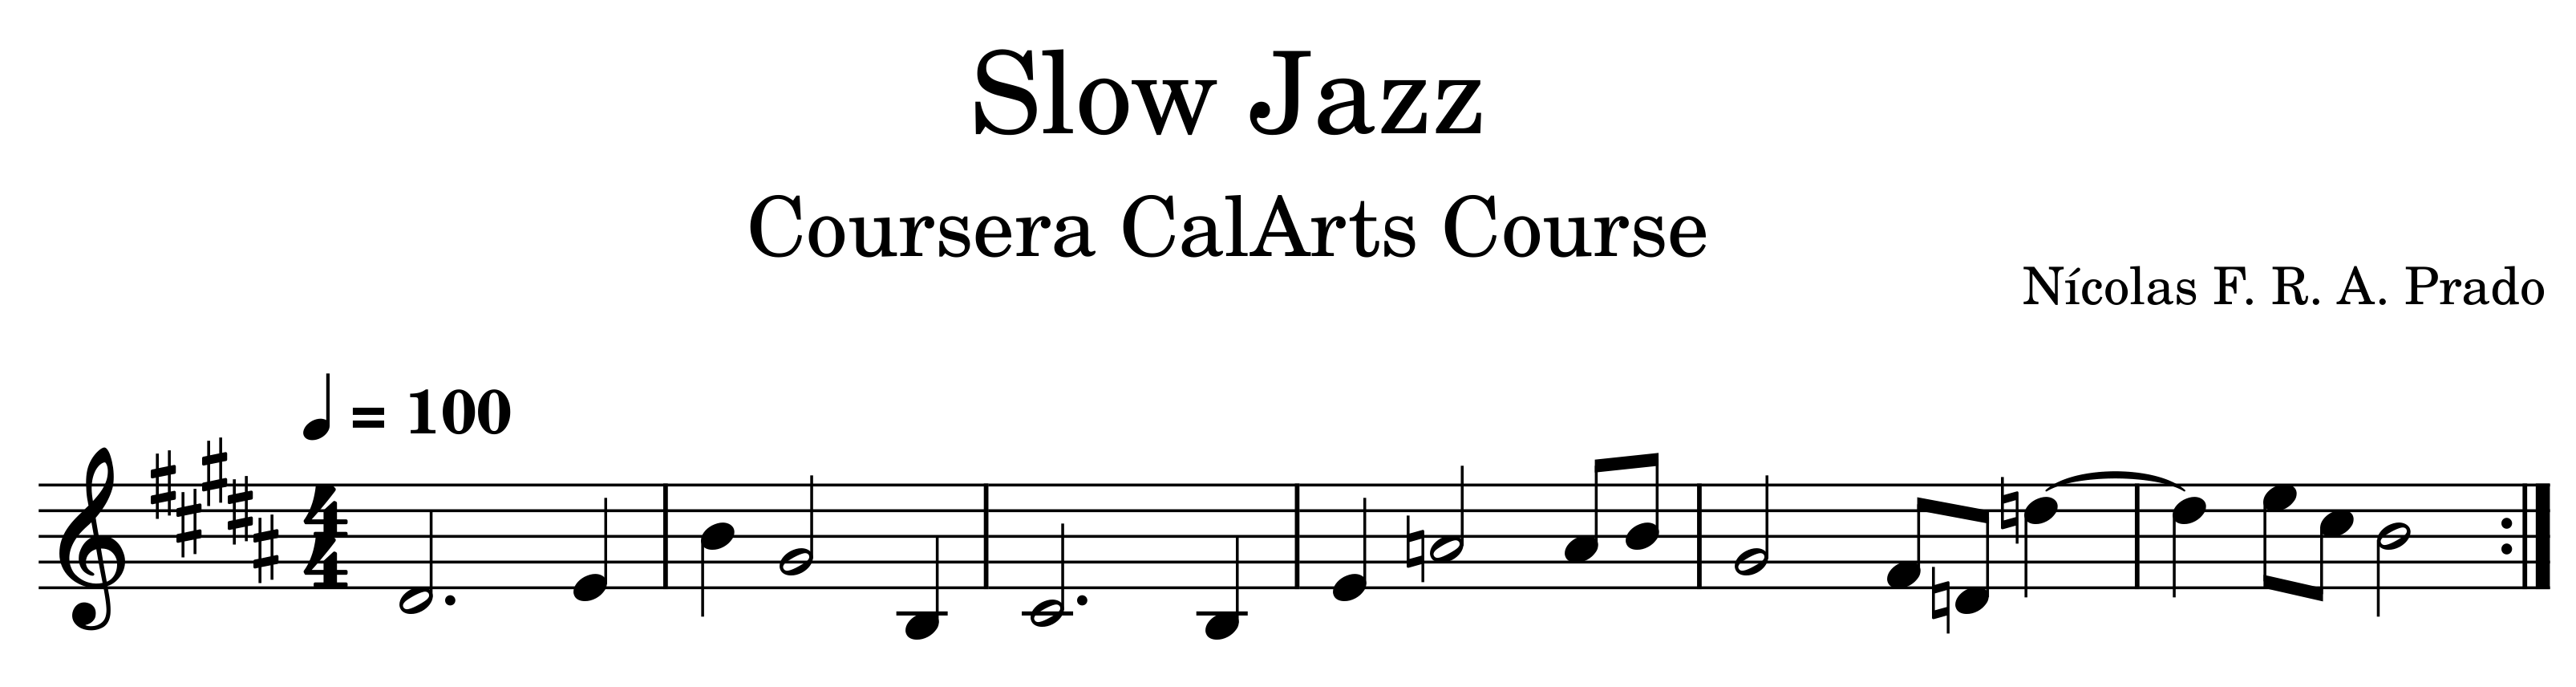 Slow Jazz melody music sheet